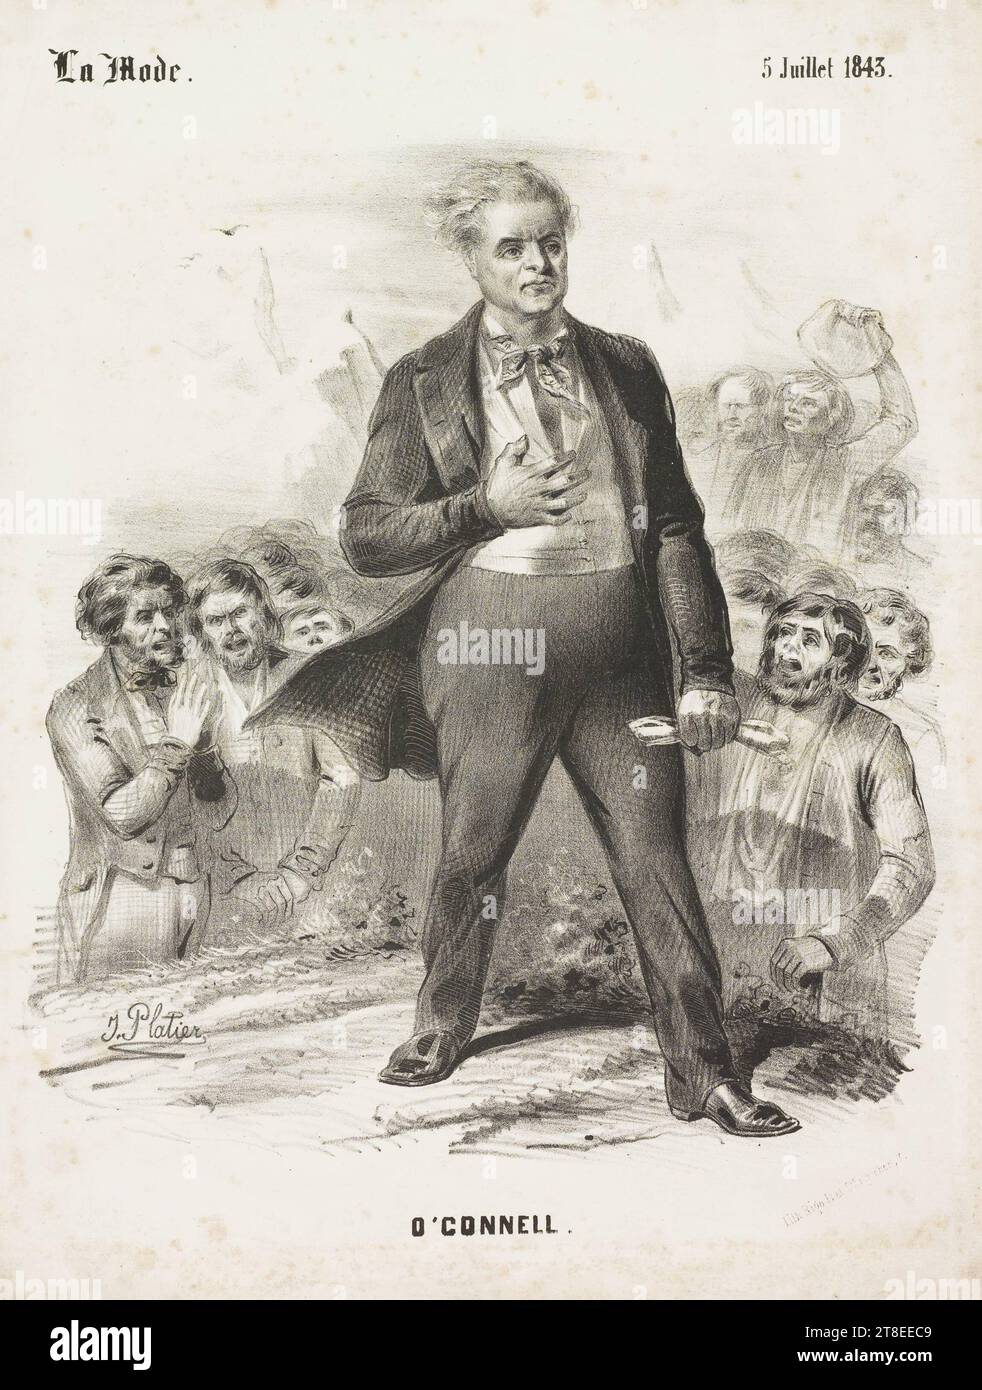 Katholische Emanzipation. J. Platier. La-Modus. Juli 1843. O'CONNELL. LITH Rigo fs et Cie, r reicher, 7 Stockfoto